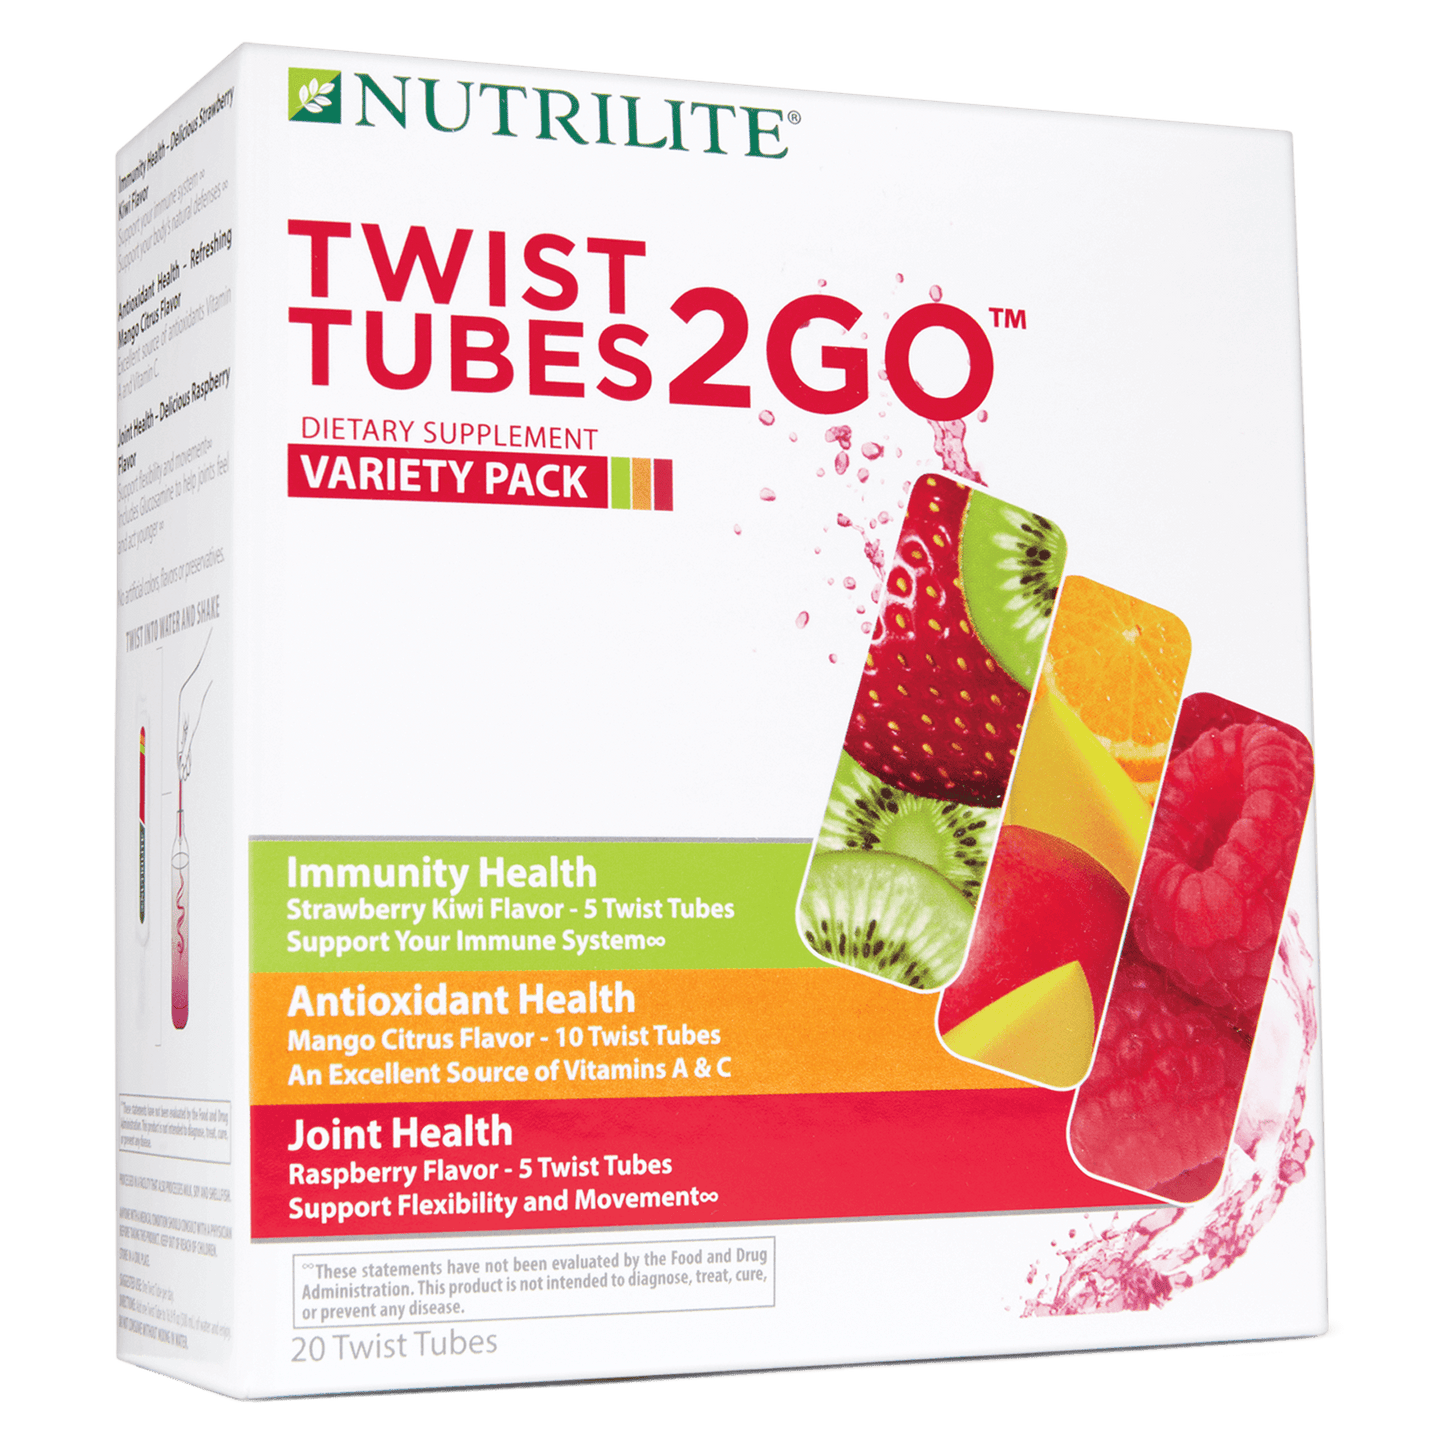 Nutrilite™ Twist Tubes 2GO™ – Variety Pack